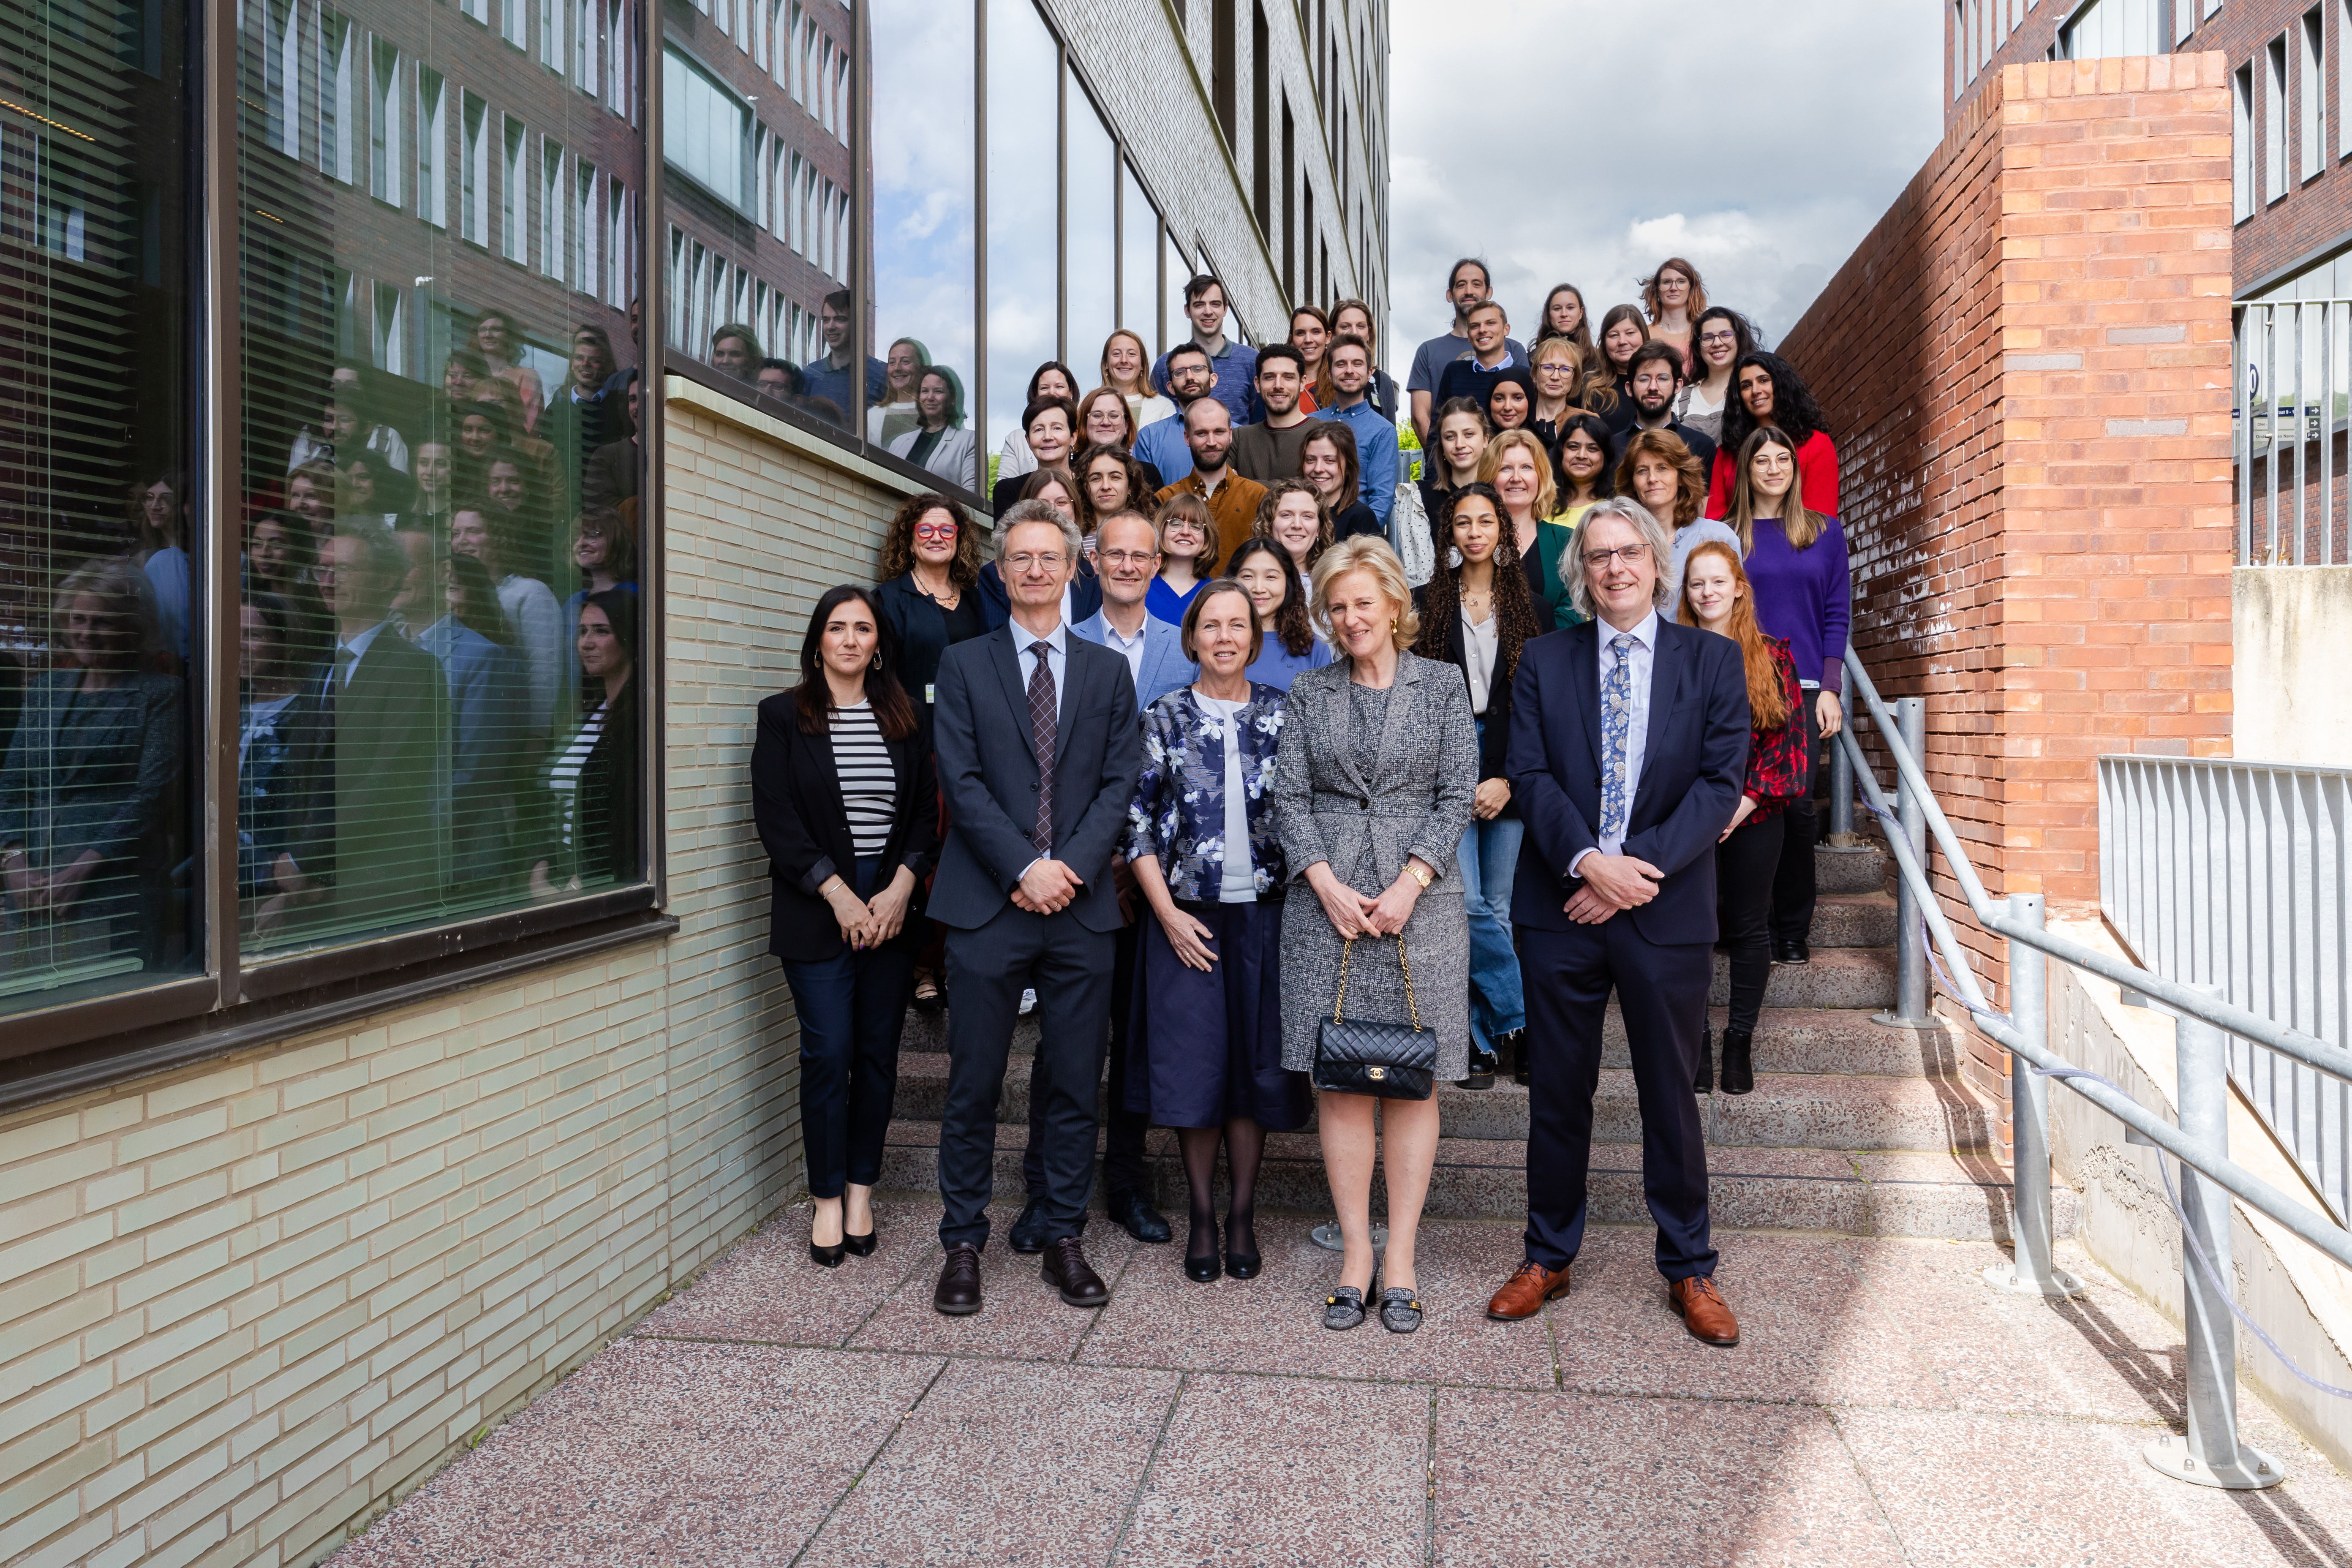 Princess Astrid with the team members of the Lab of Neurobiology. ©️Geert Vanden Wijngaert